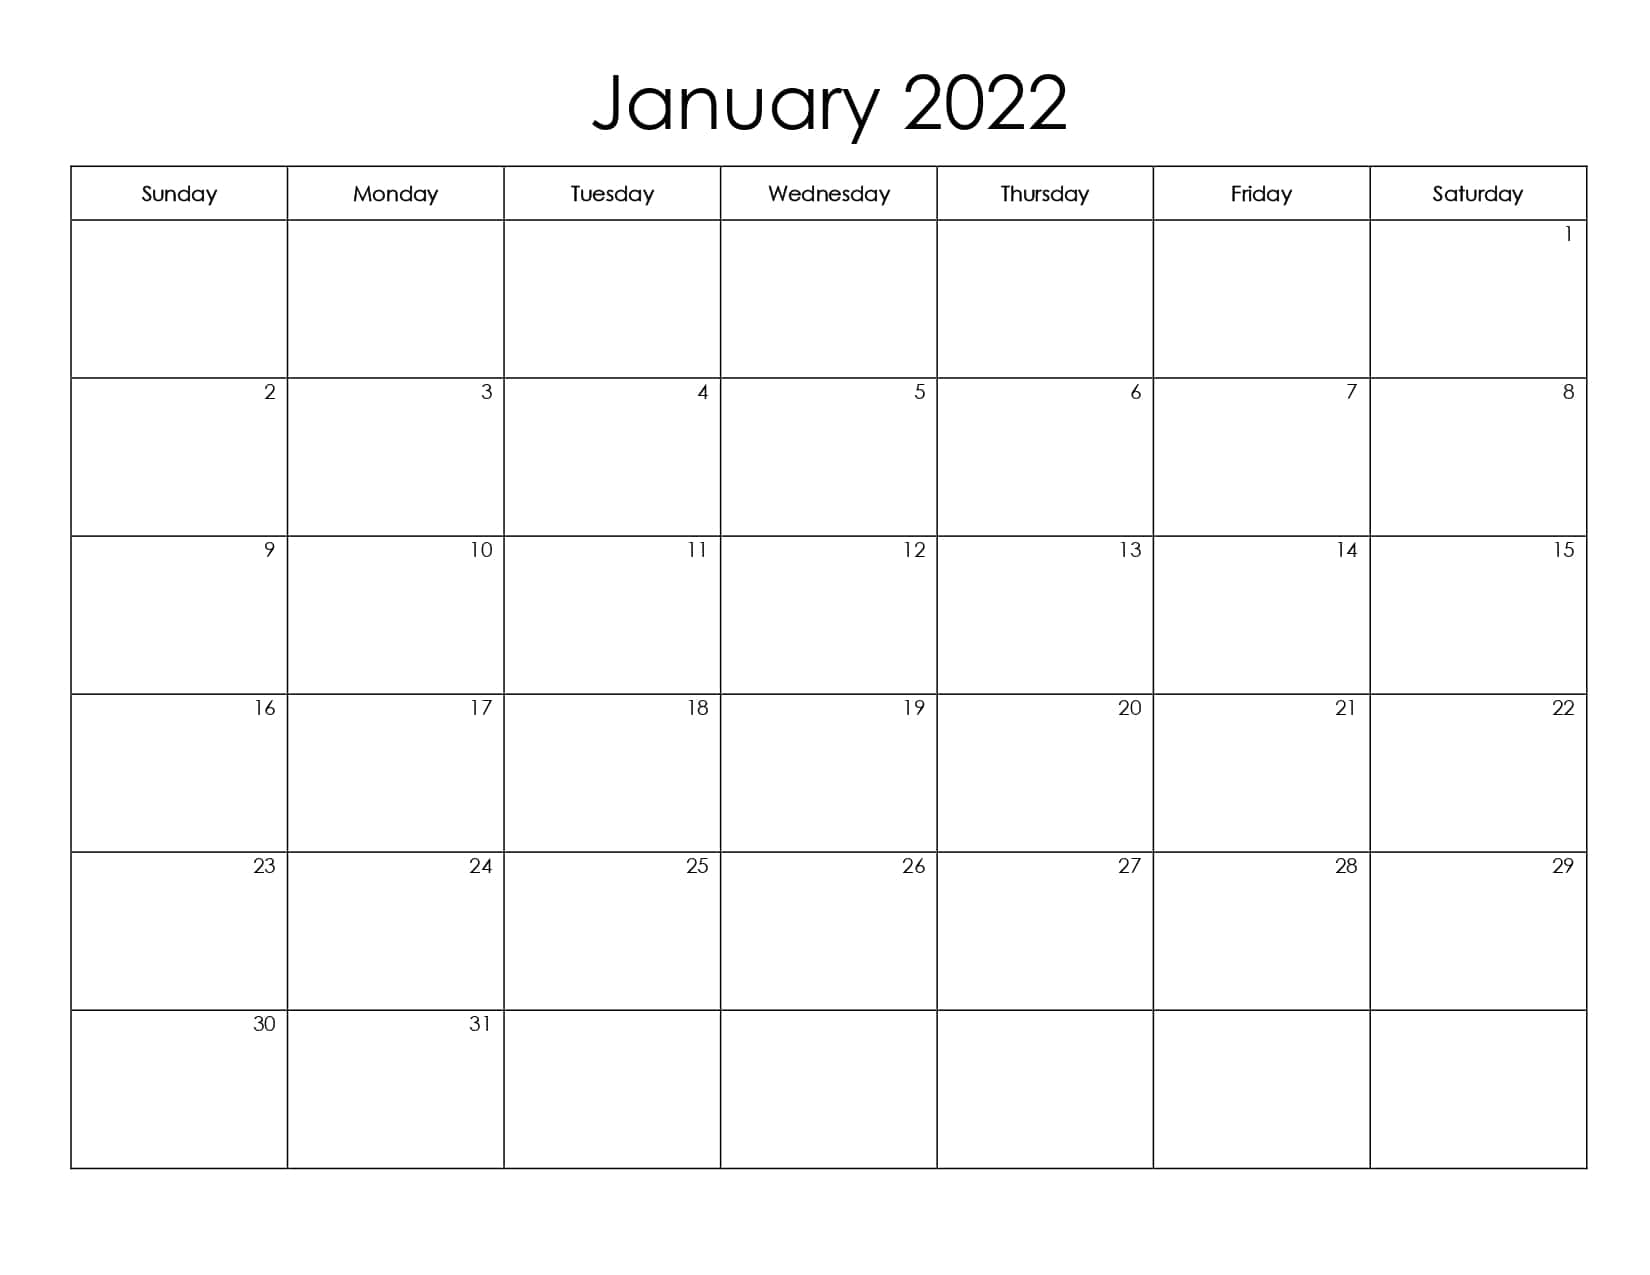 Stunning January 2022 Calendar on a Scenic Winter Landscape